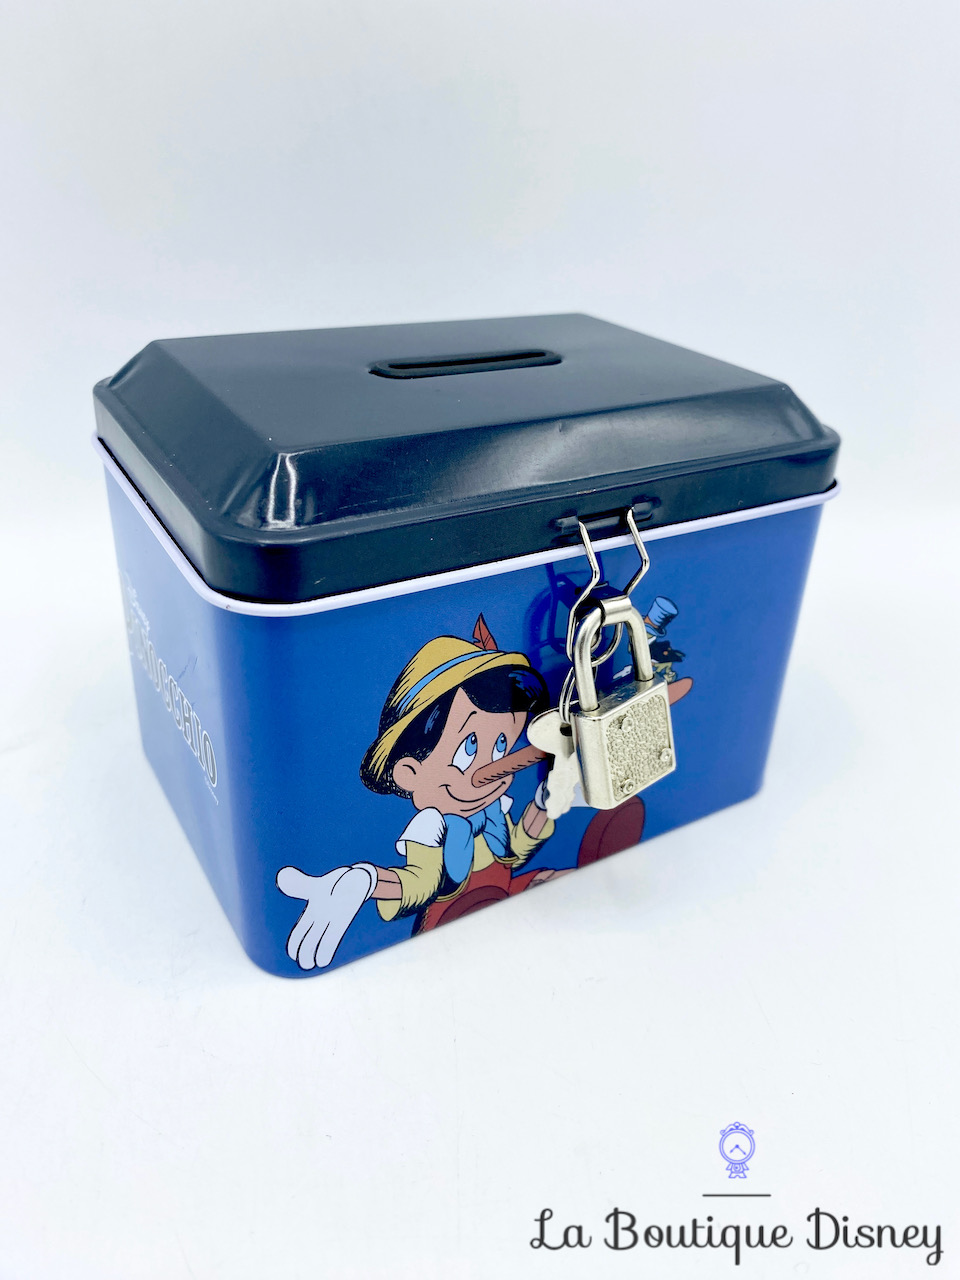 Tirelire métal Pinocchio Disney WO Products boite coffre bleu cadenas